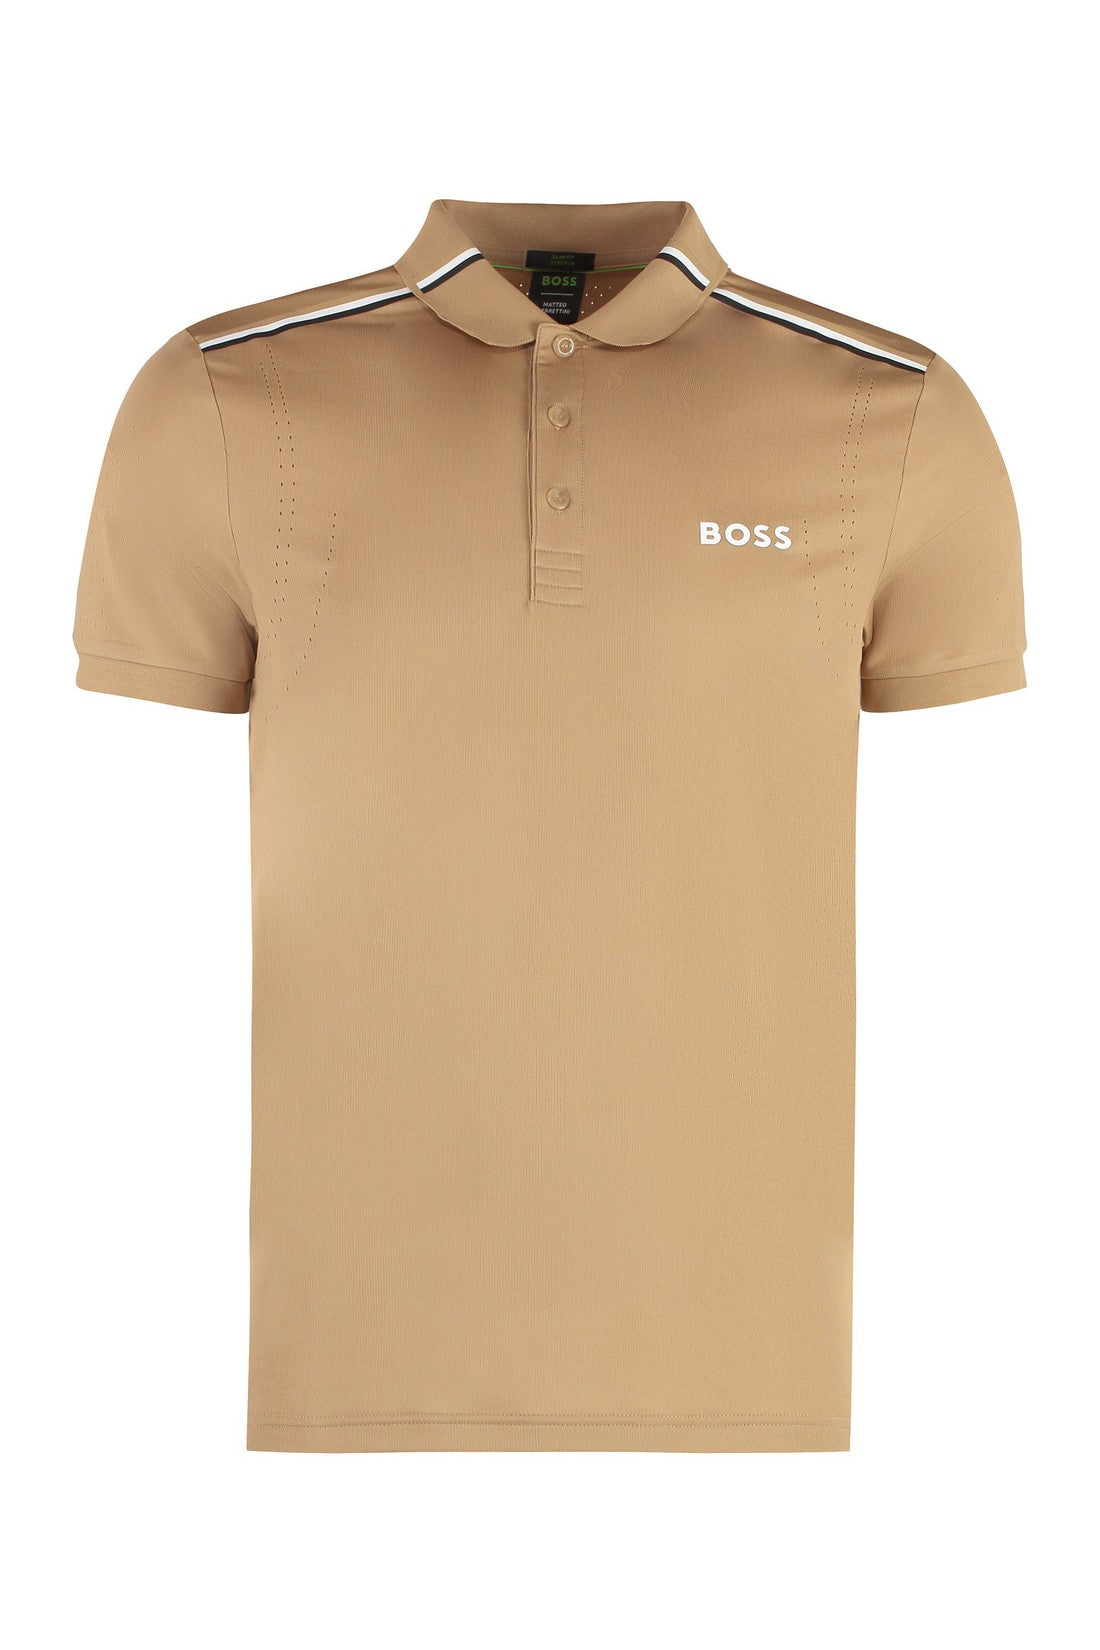 BOSS-OUTLET-SALE-BOSS x Matteo Berrettini - Technical fabric polo shirt-ARCHIVIST